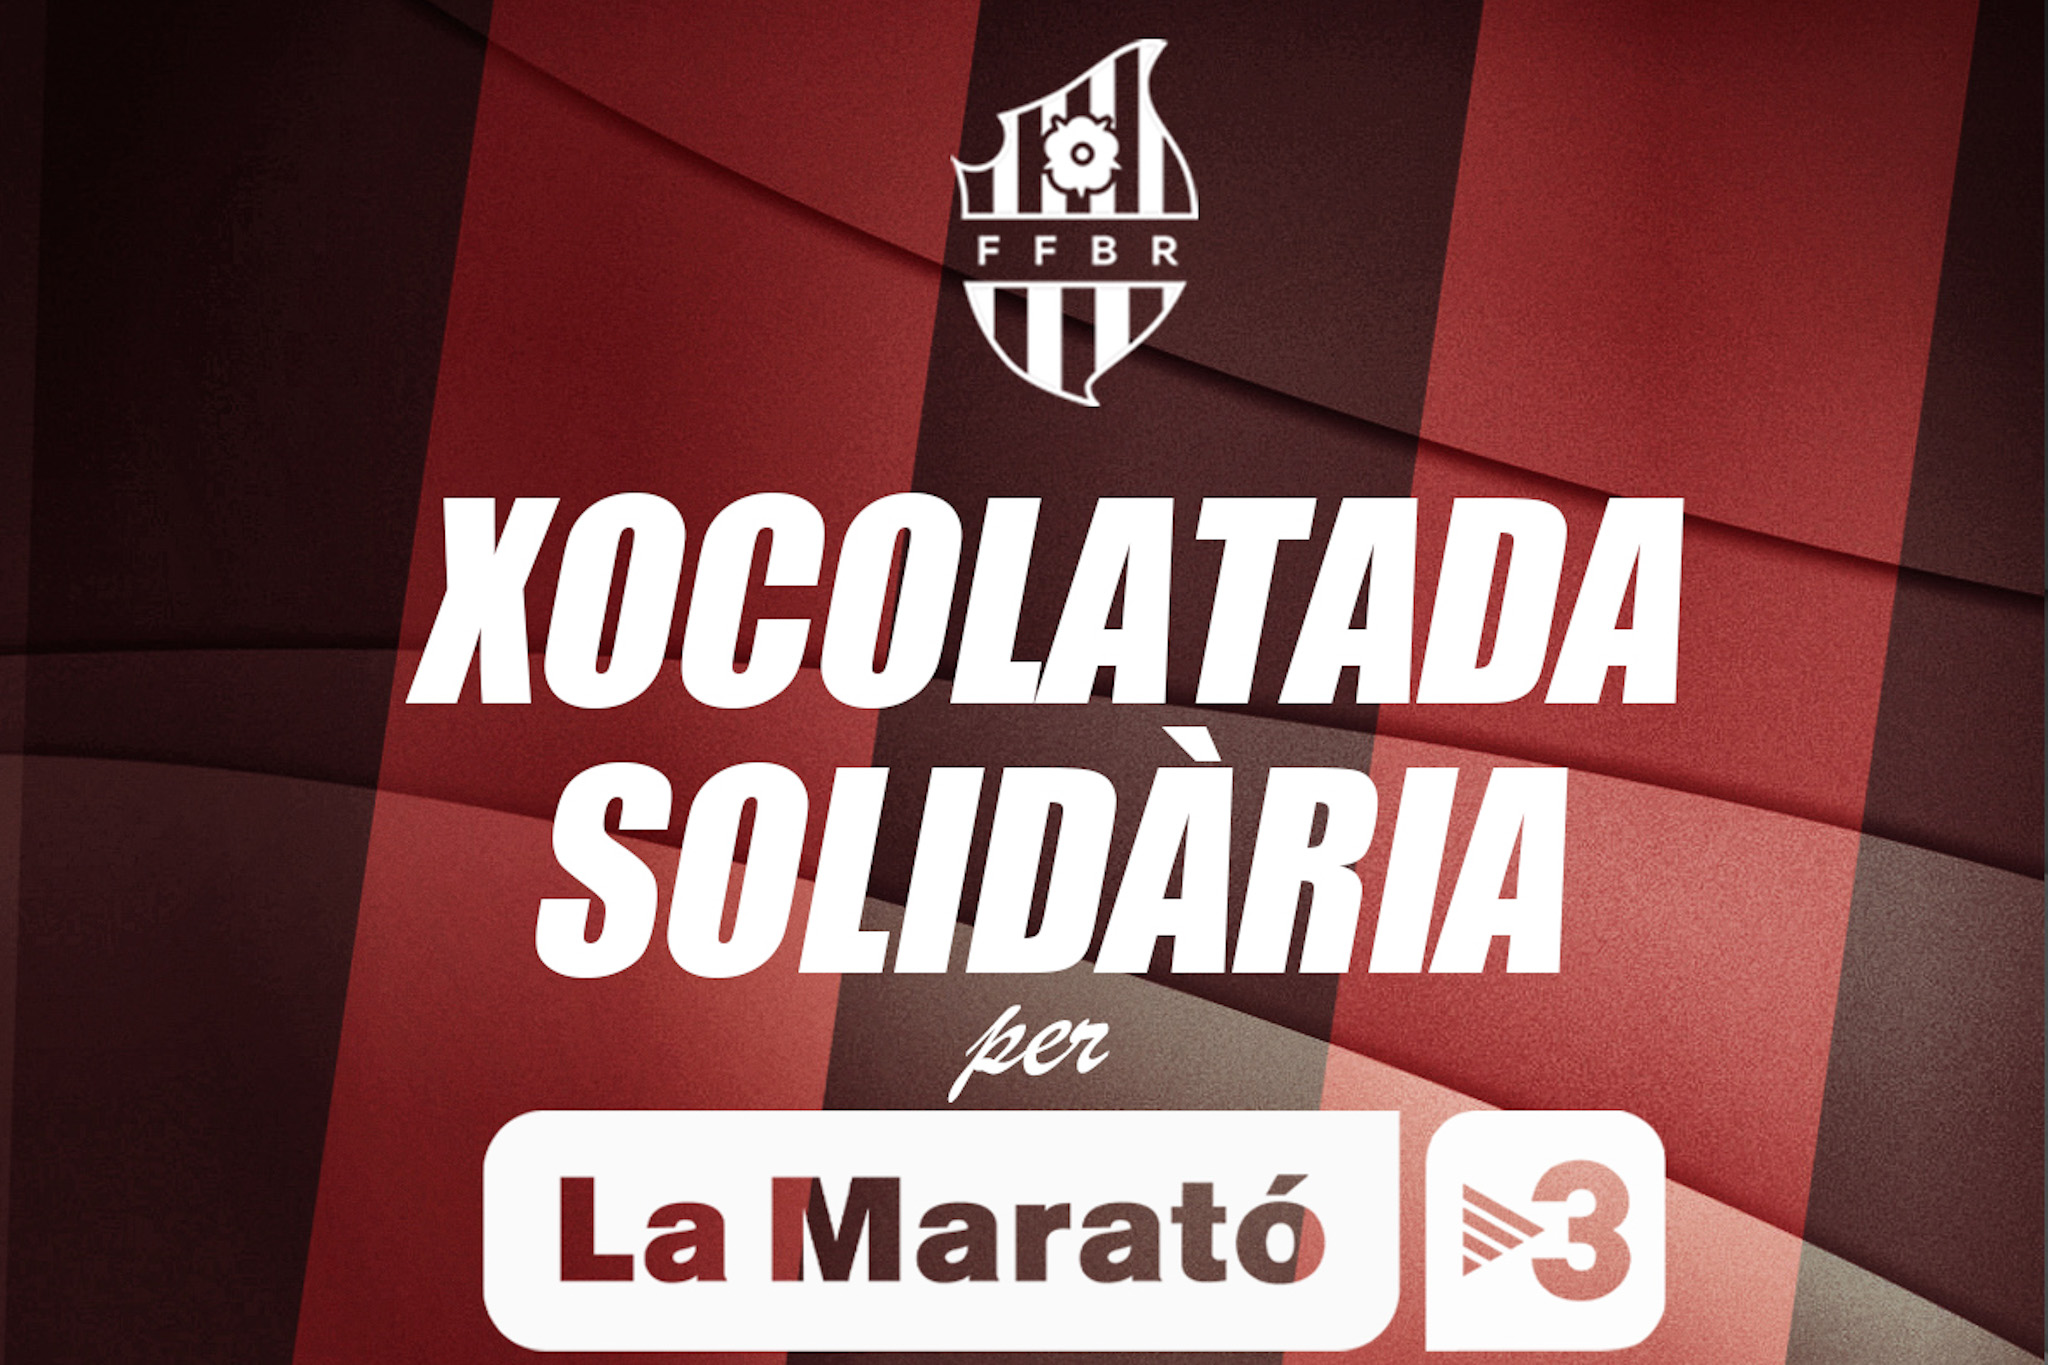 En este momento estás viendo Xocolatada solidària per La Marató de TV3